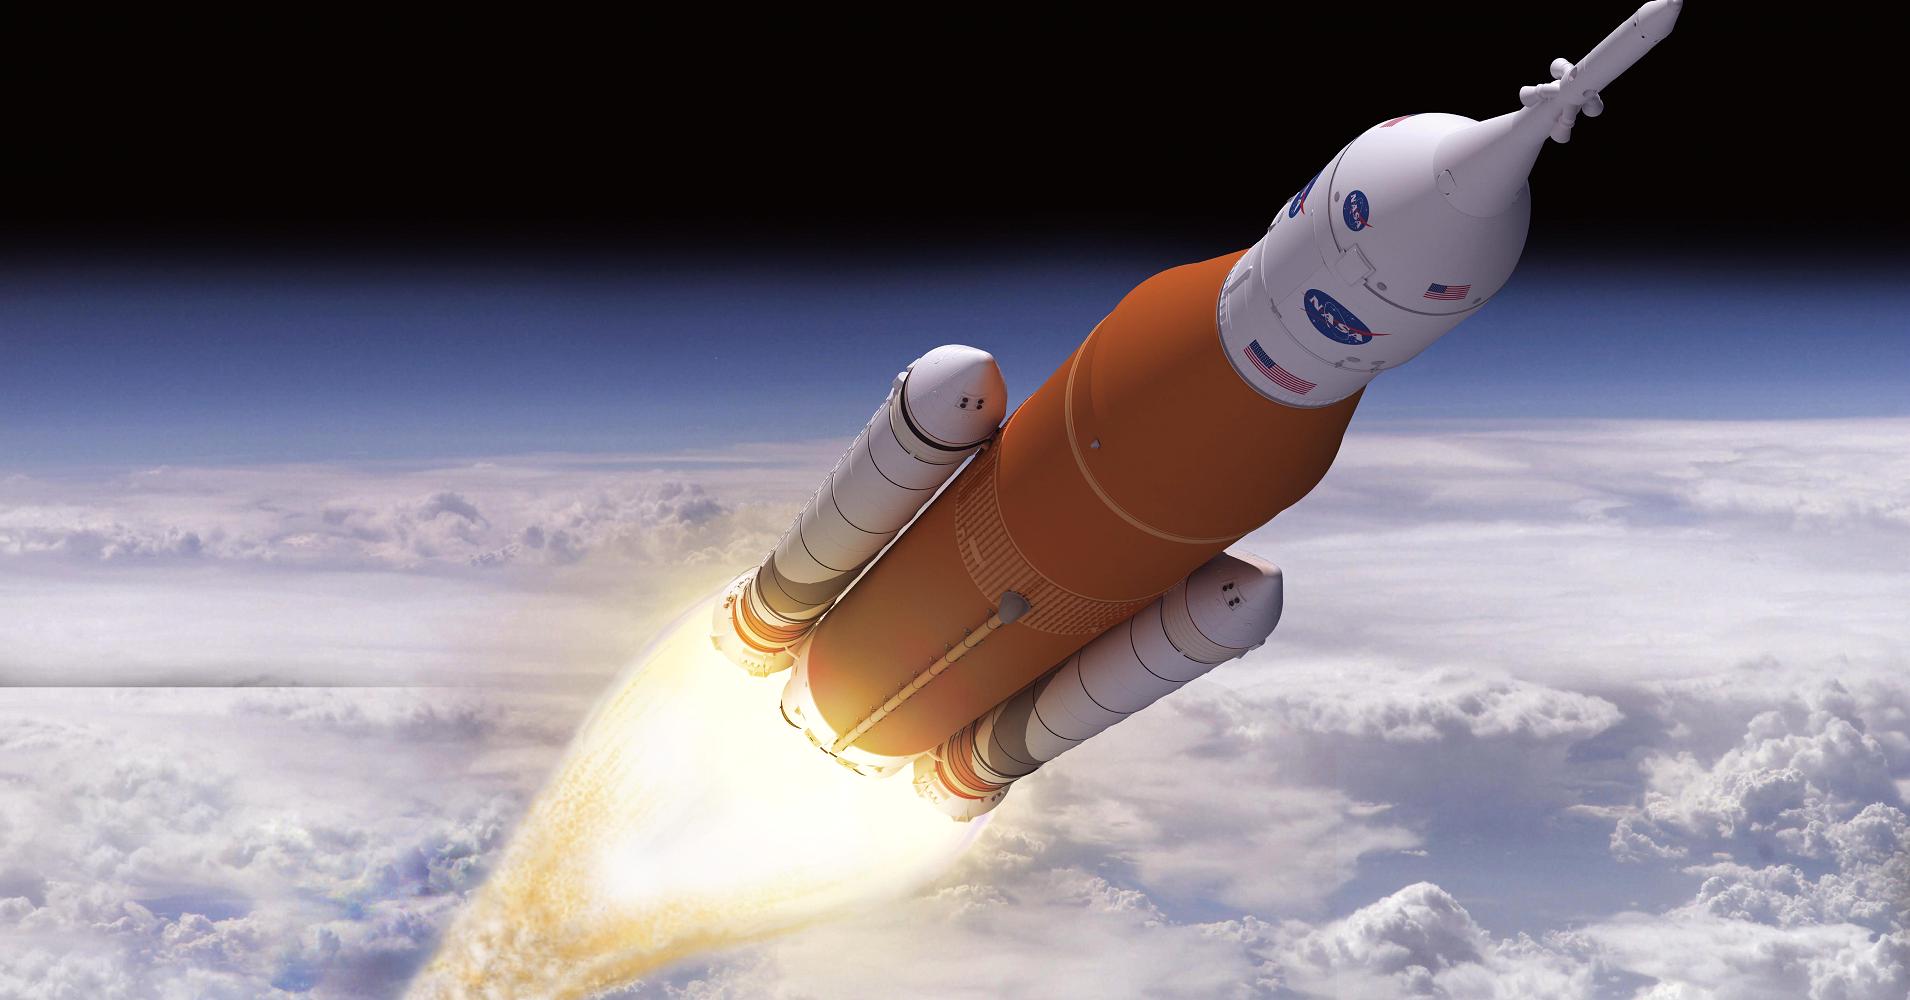 NASA'nın dev Mars roketi SLS yine ertelendi 'Bu sefer hedef 2020'